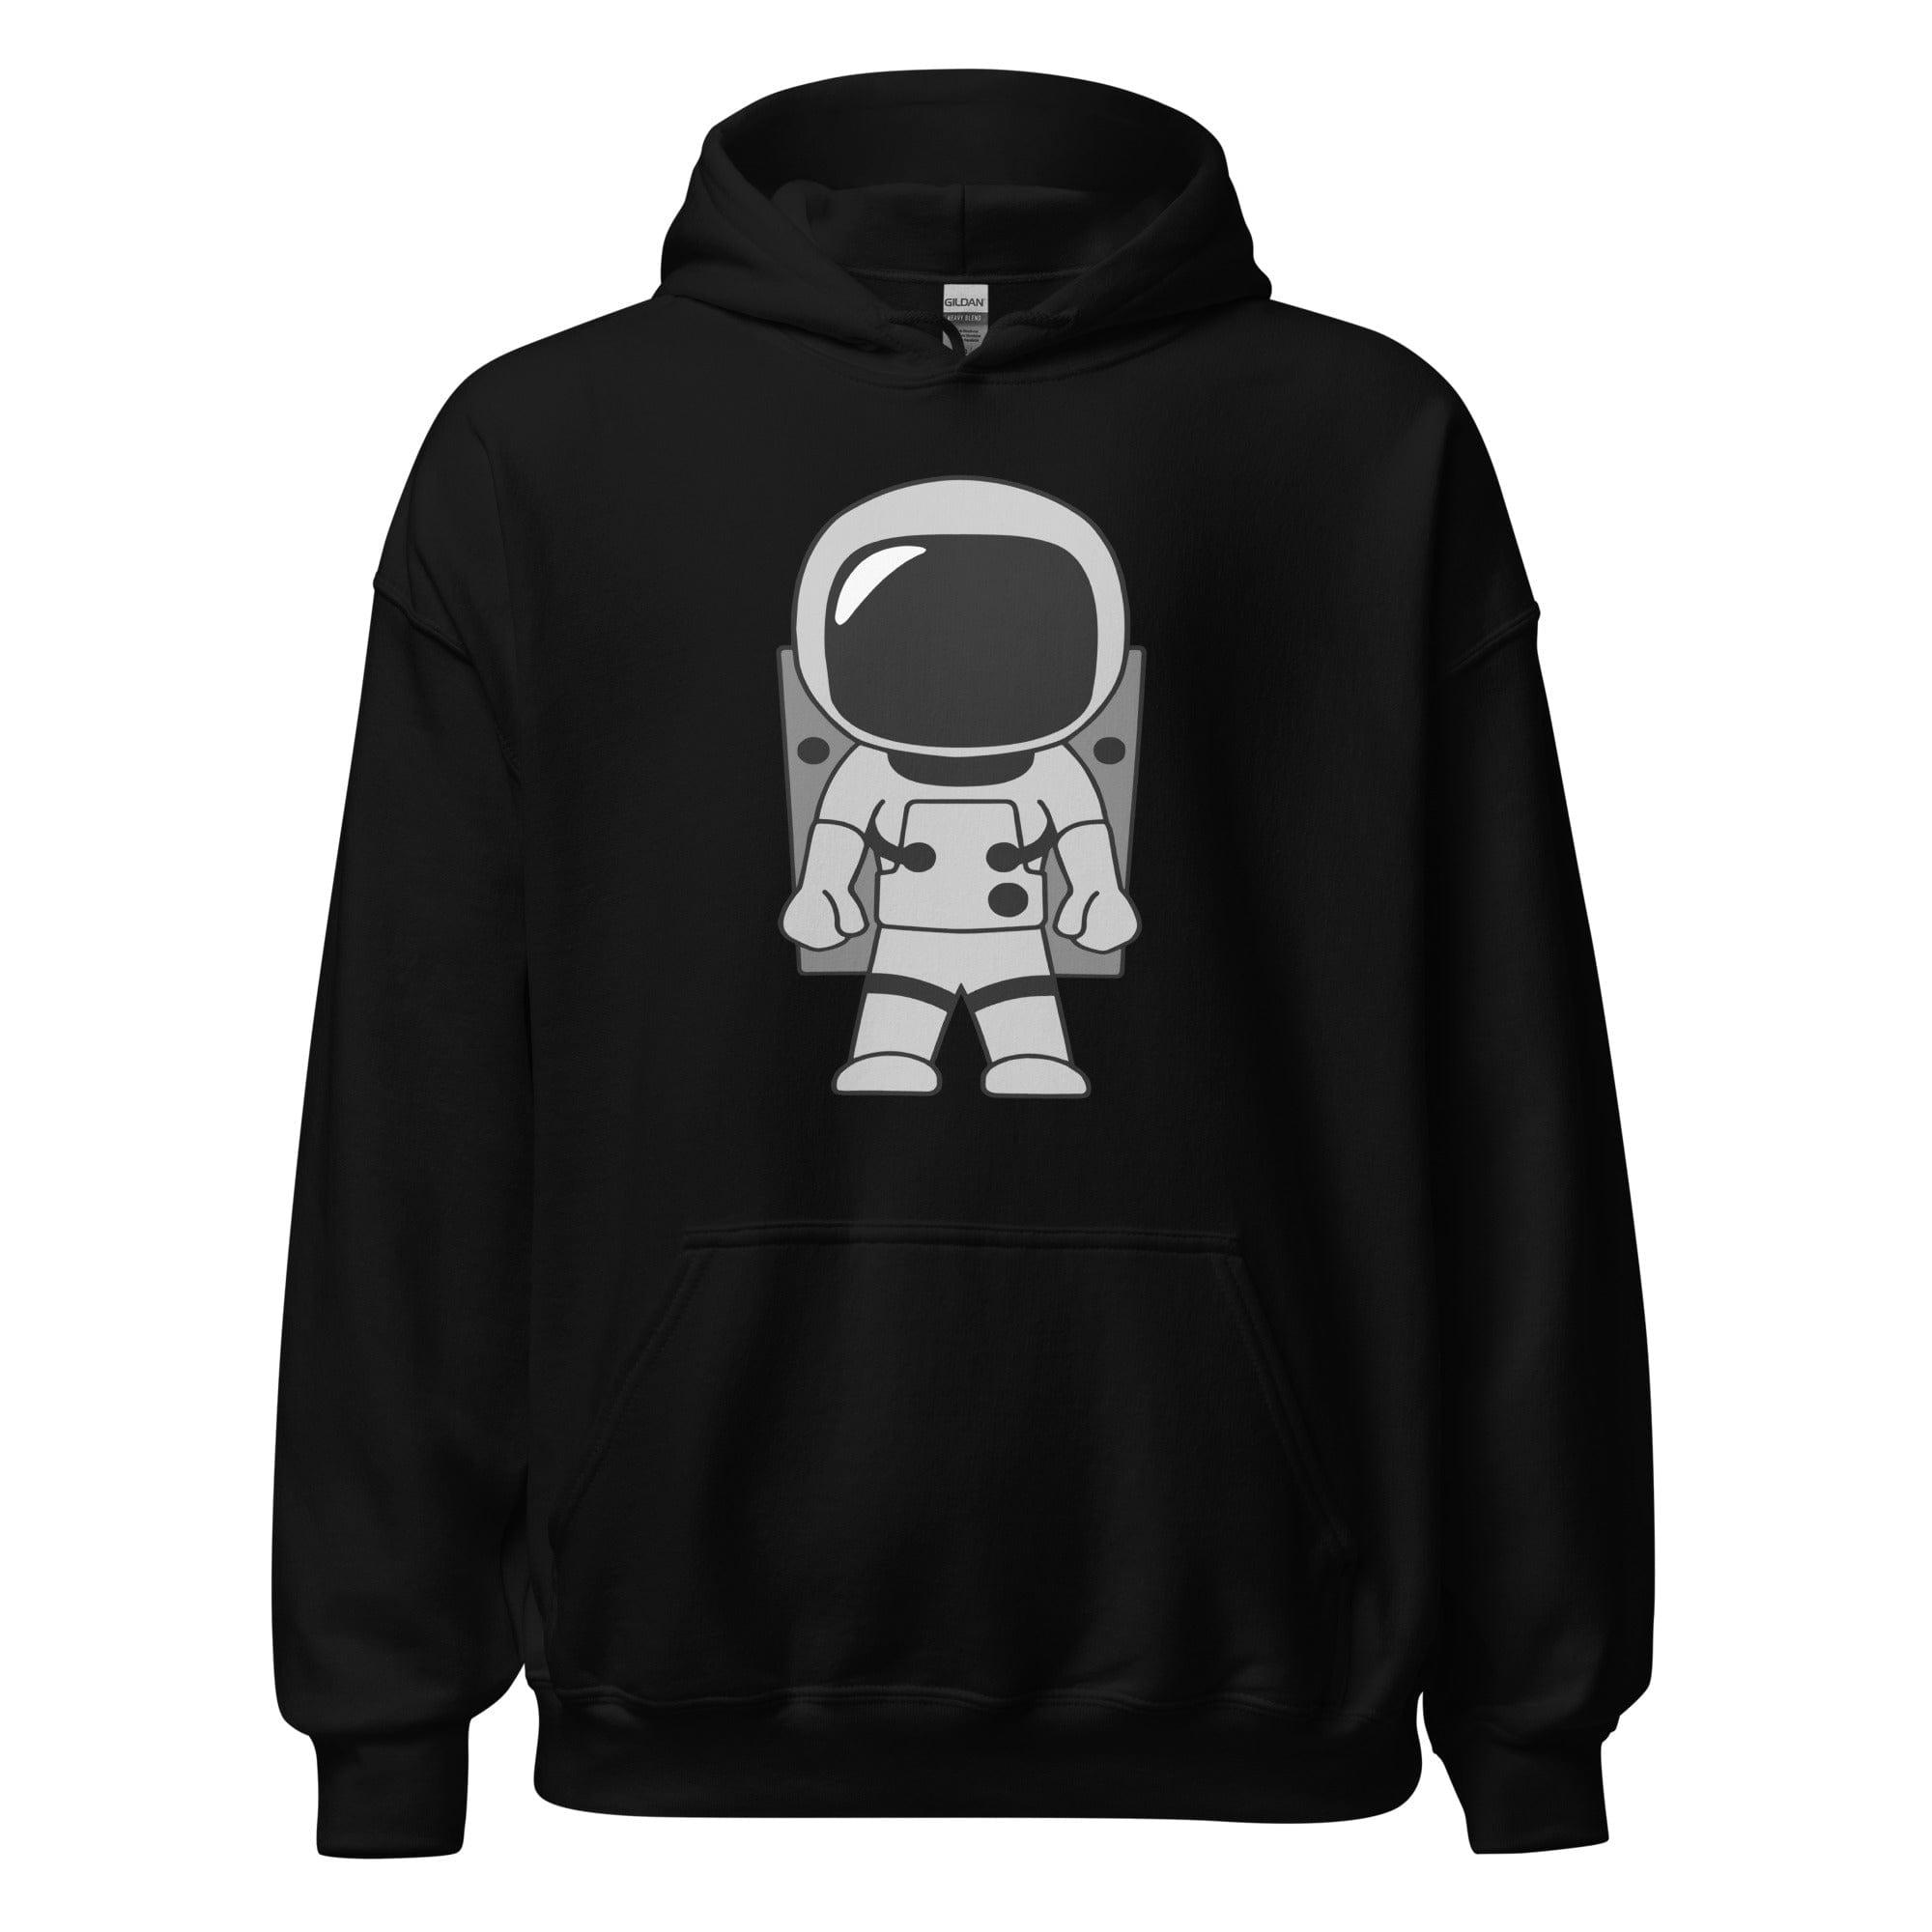 NASA Hoodie of Astronaut in Space Suit and Space Helmet - TopKoalaTee